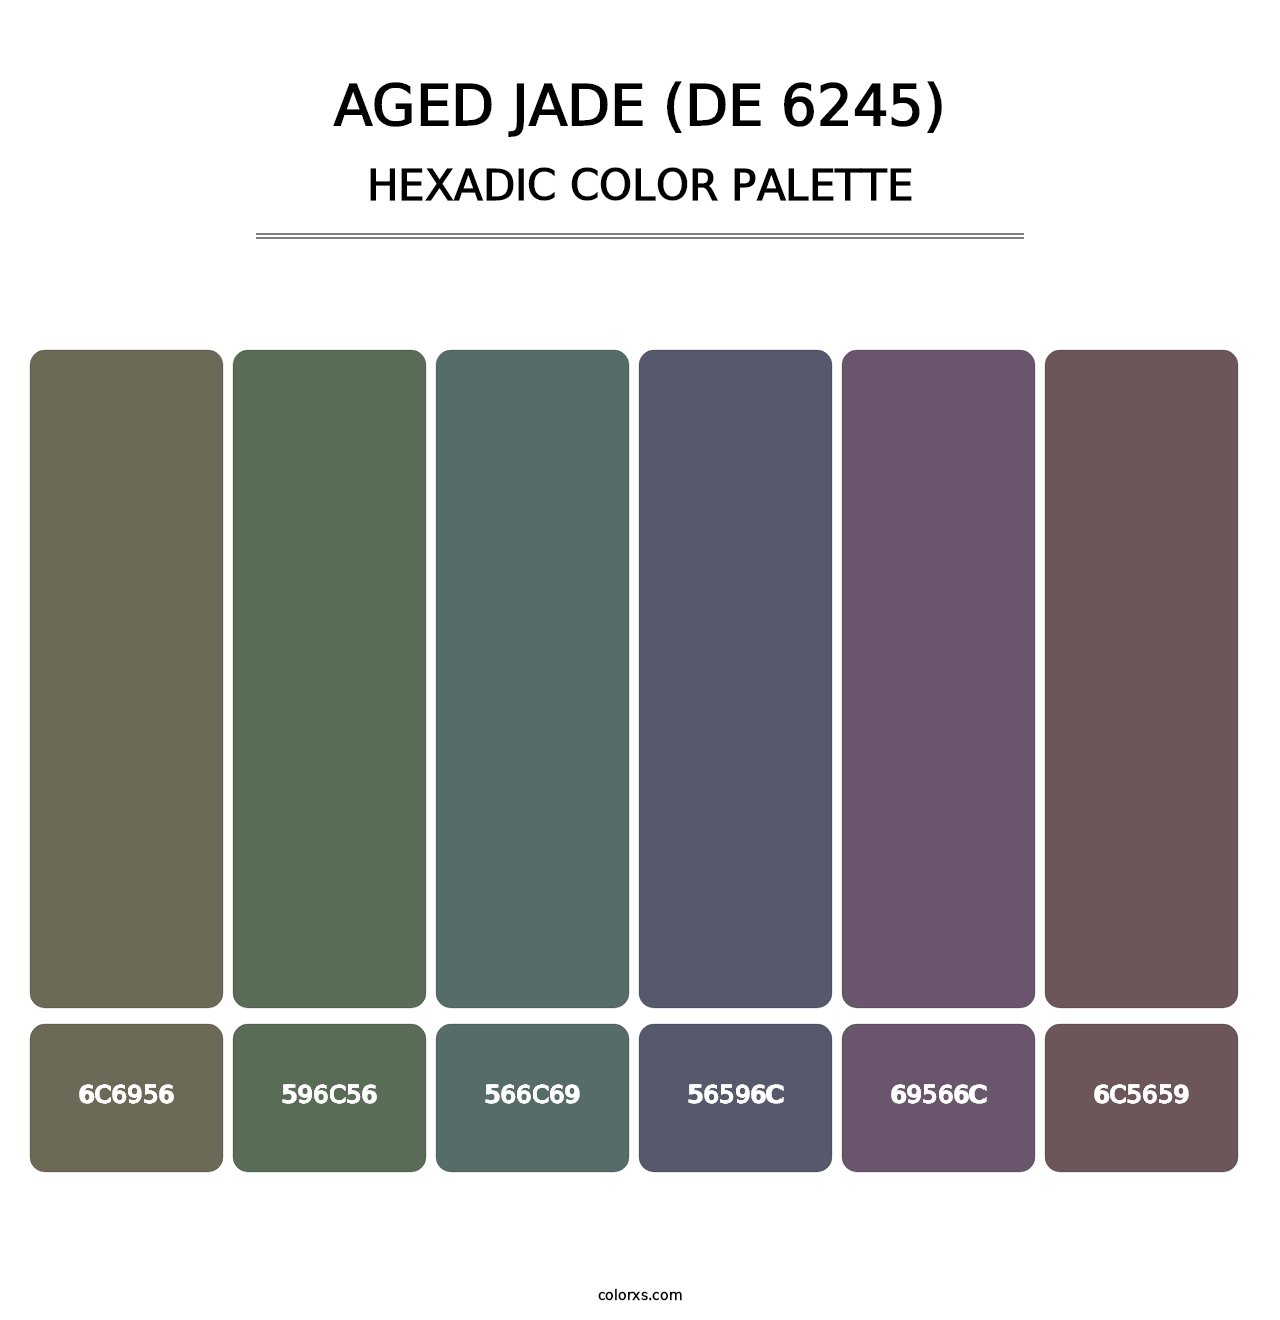 Aged Jade (DE 6245) - Hexadic Color Palette